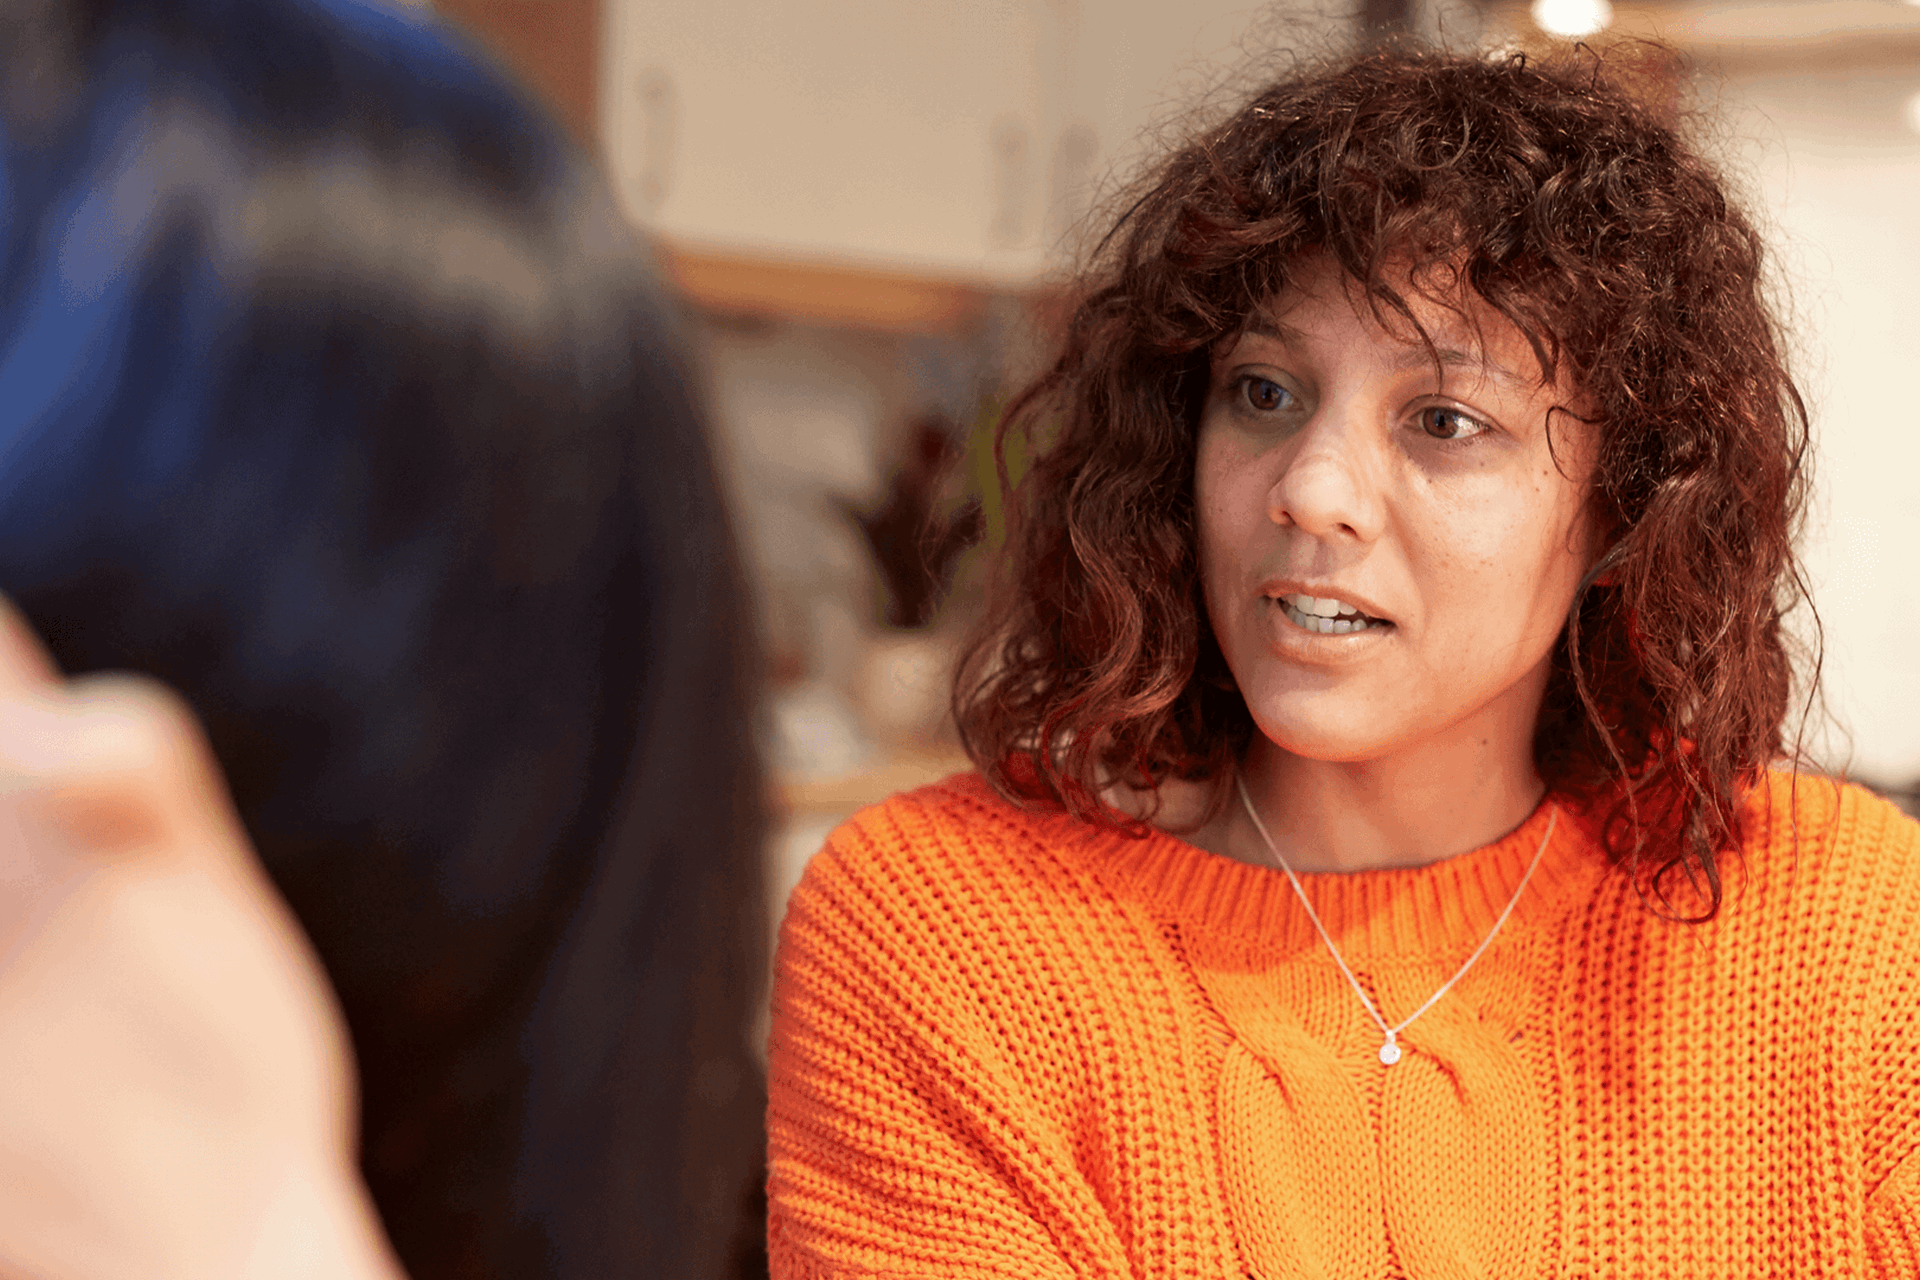 A girl wearing a bright orange jumper in deep conversation